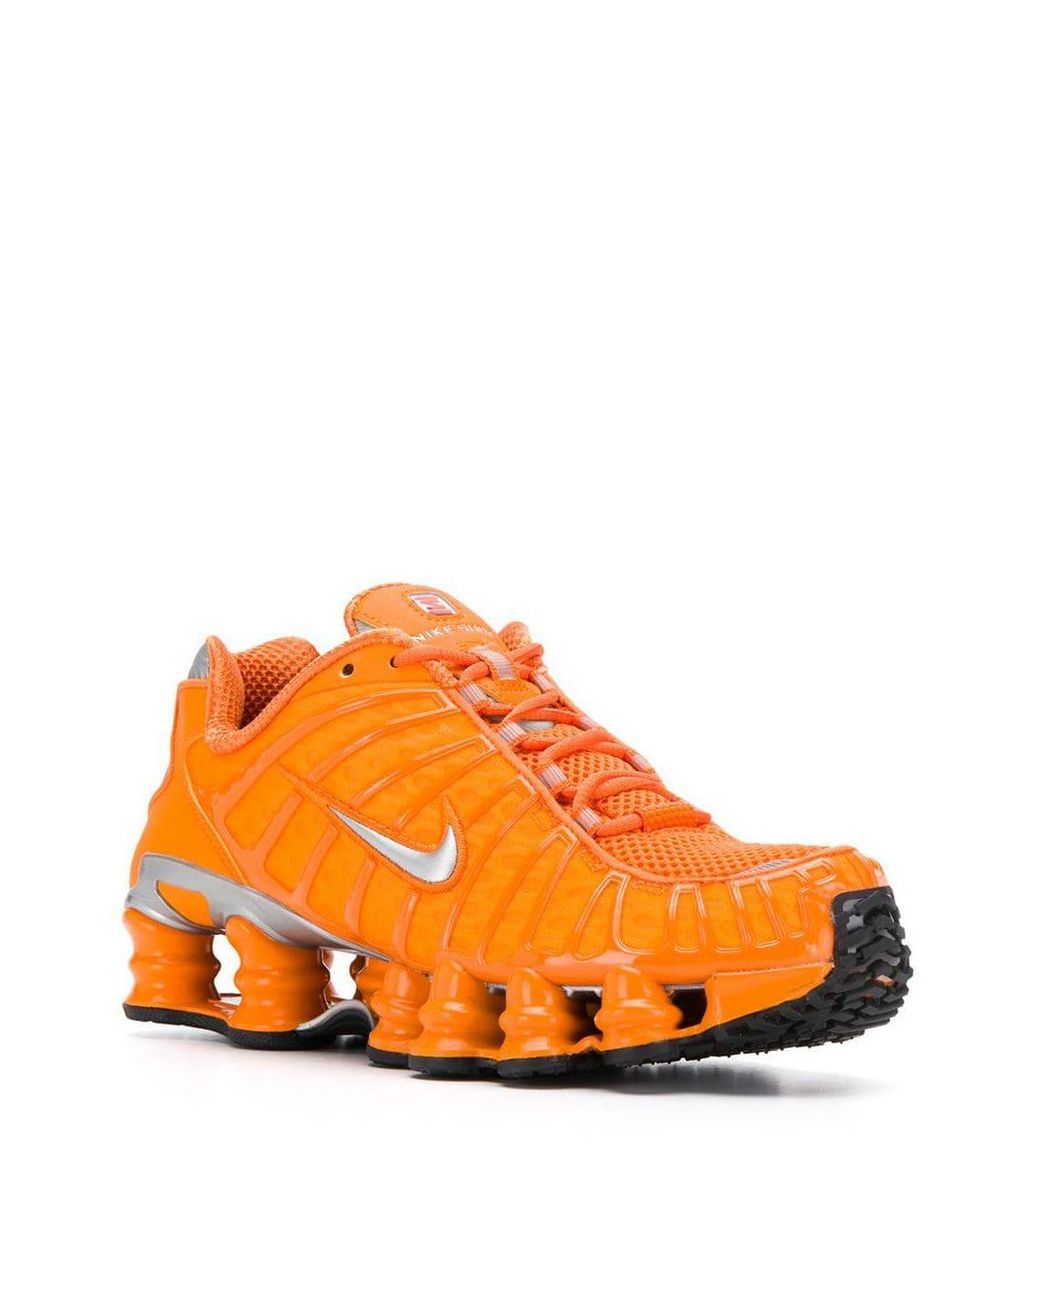 Zapatillas Shox TL Nike de hombre color Naranja |